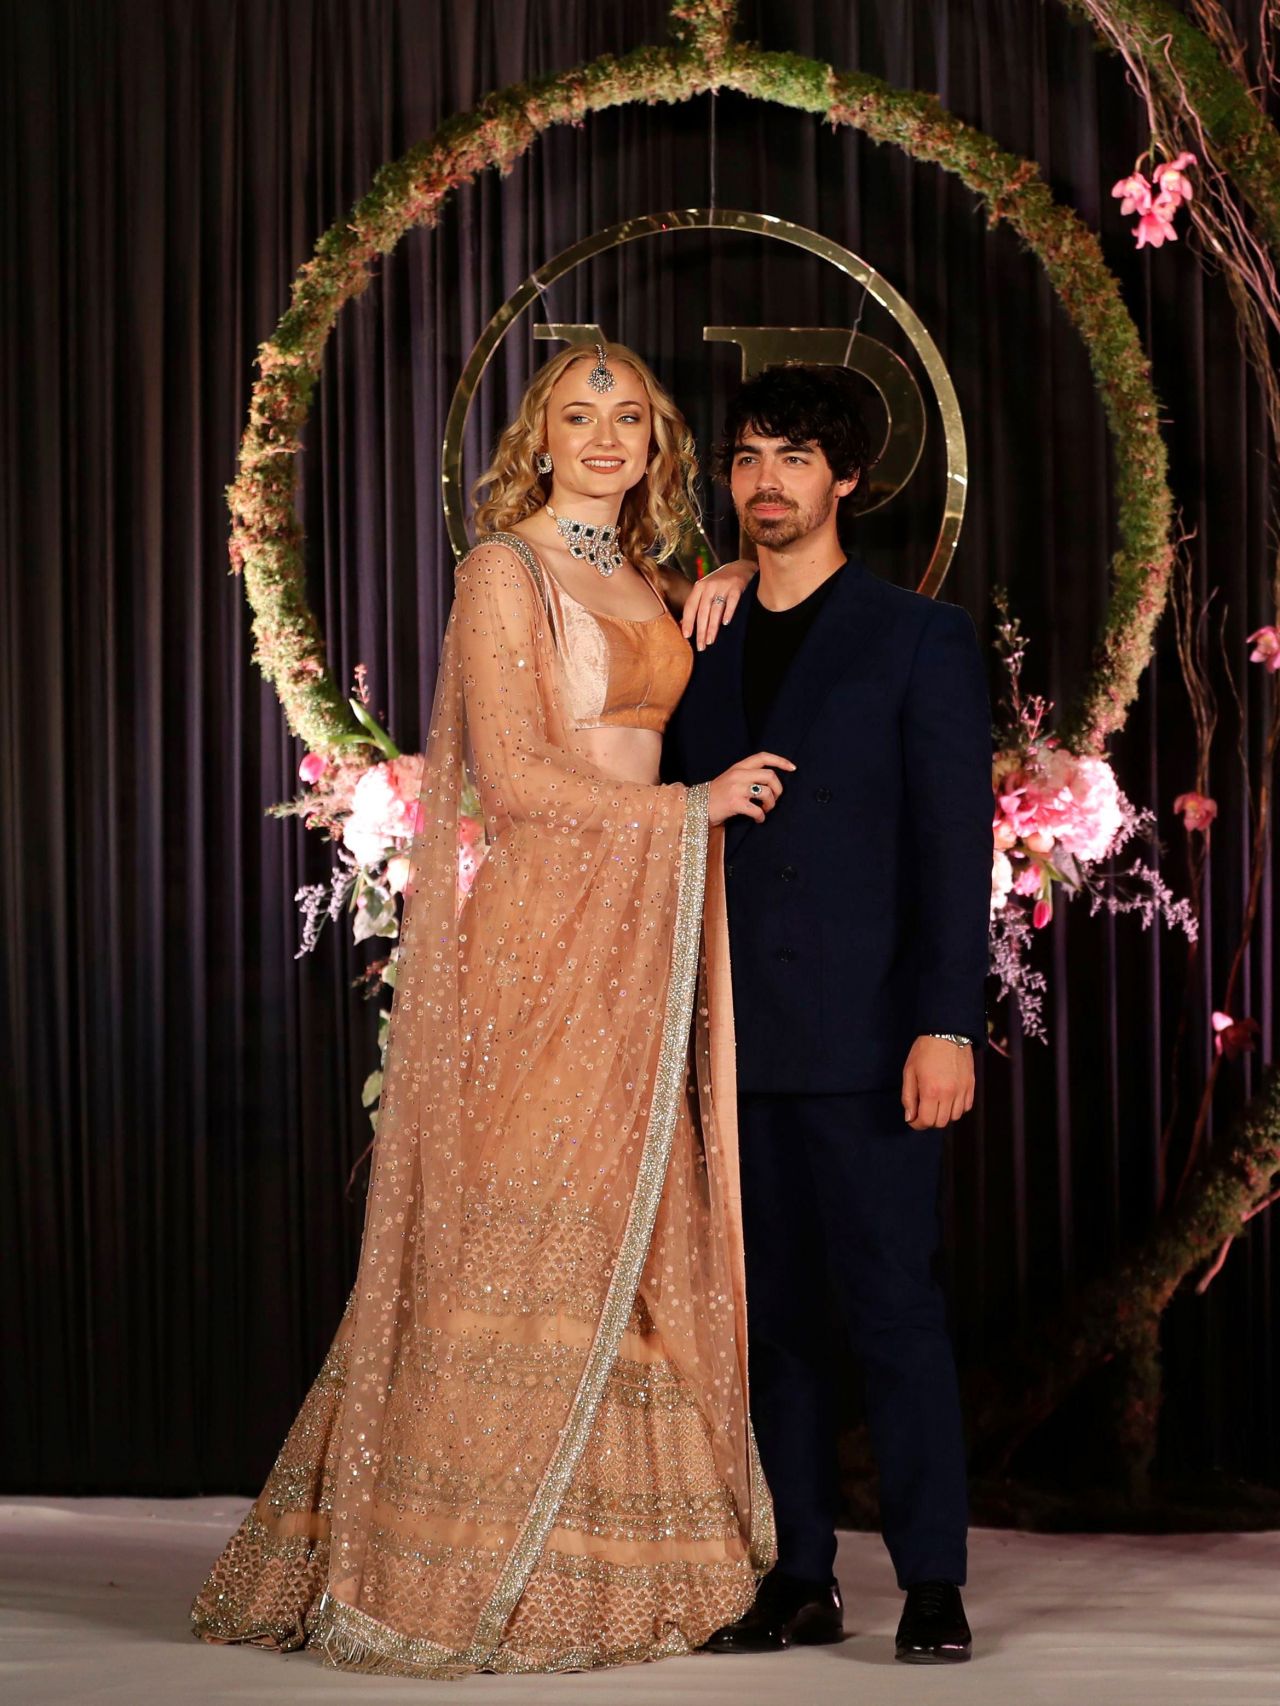 Sophie Turner and Joe Jonas at Wedding Reception in India 12/04/20181280 x 1706